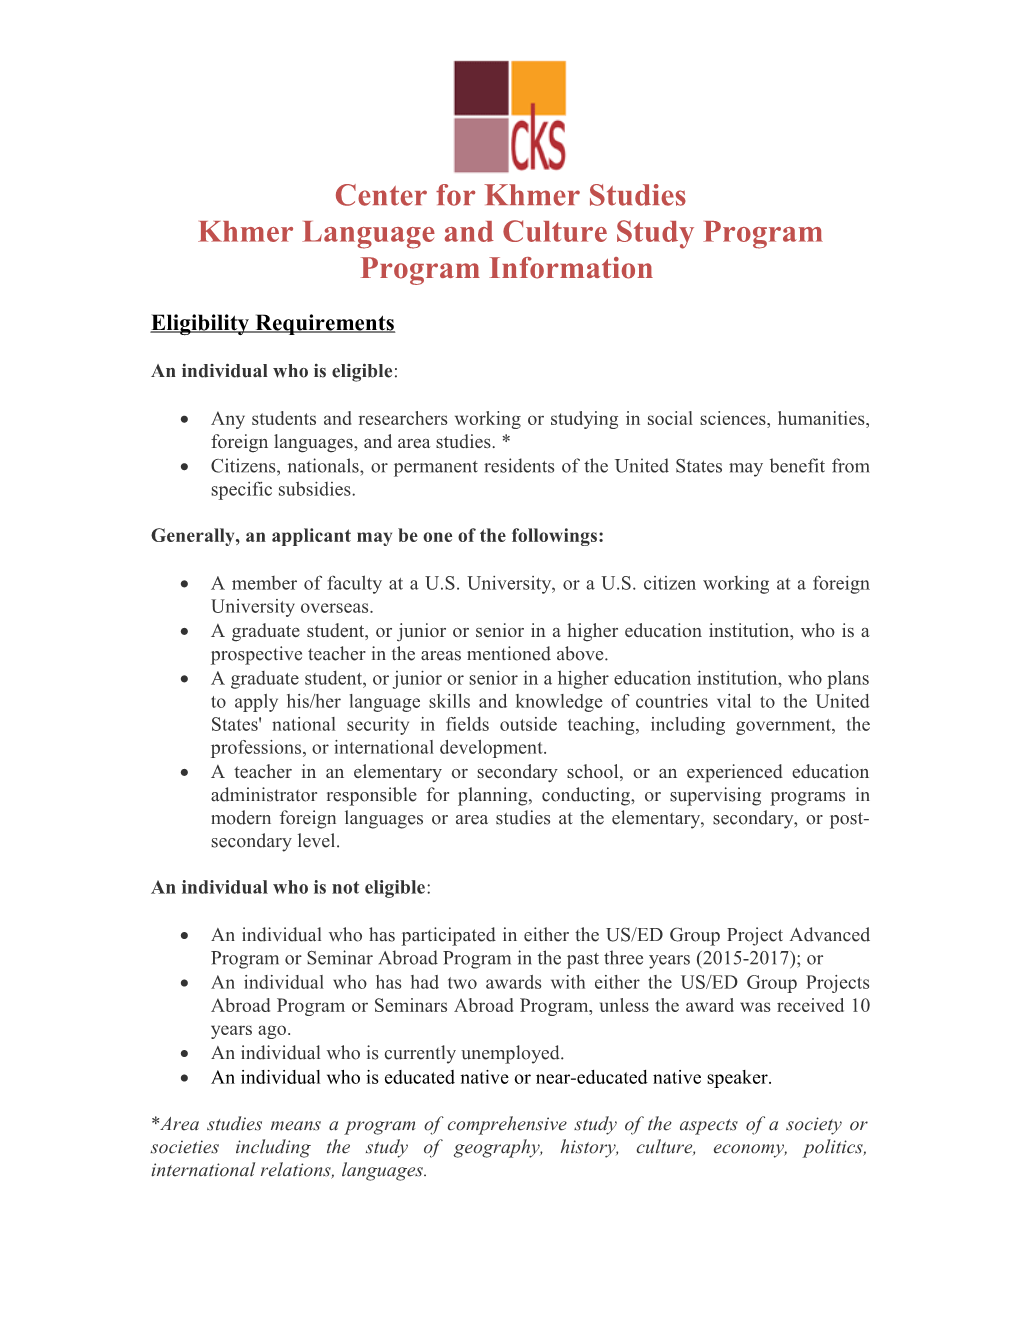 Center for Khmer Studies Khmer Language and Culture Study Program